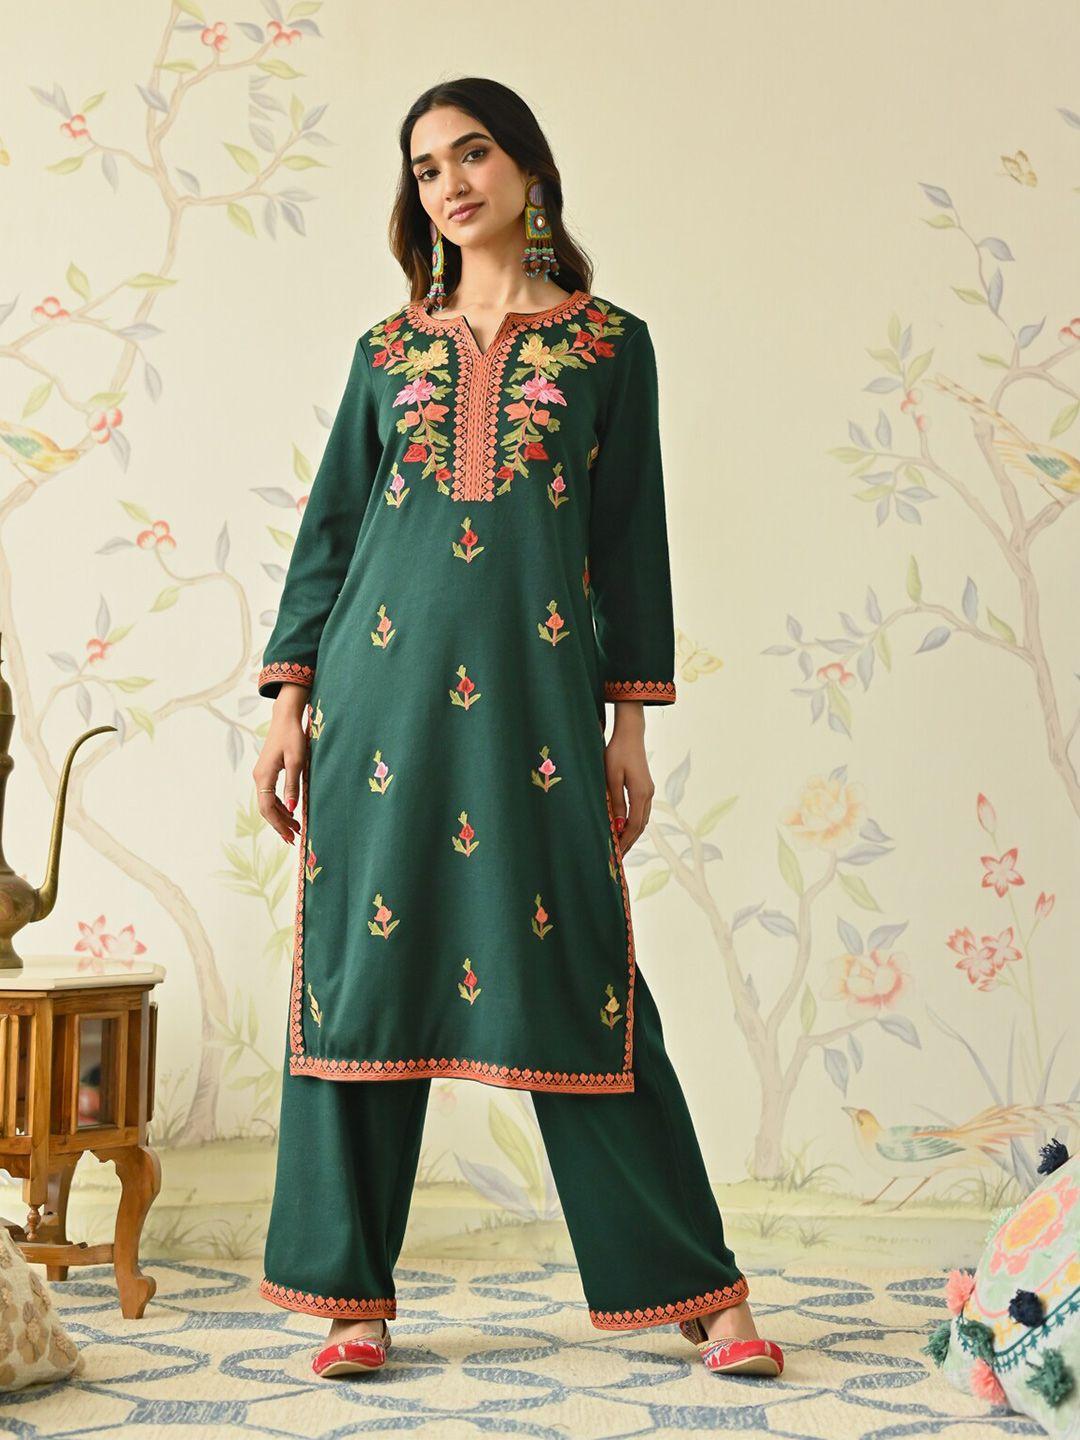 rustorange women green floral embroidered regular thread work kurta with salwar